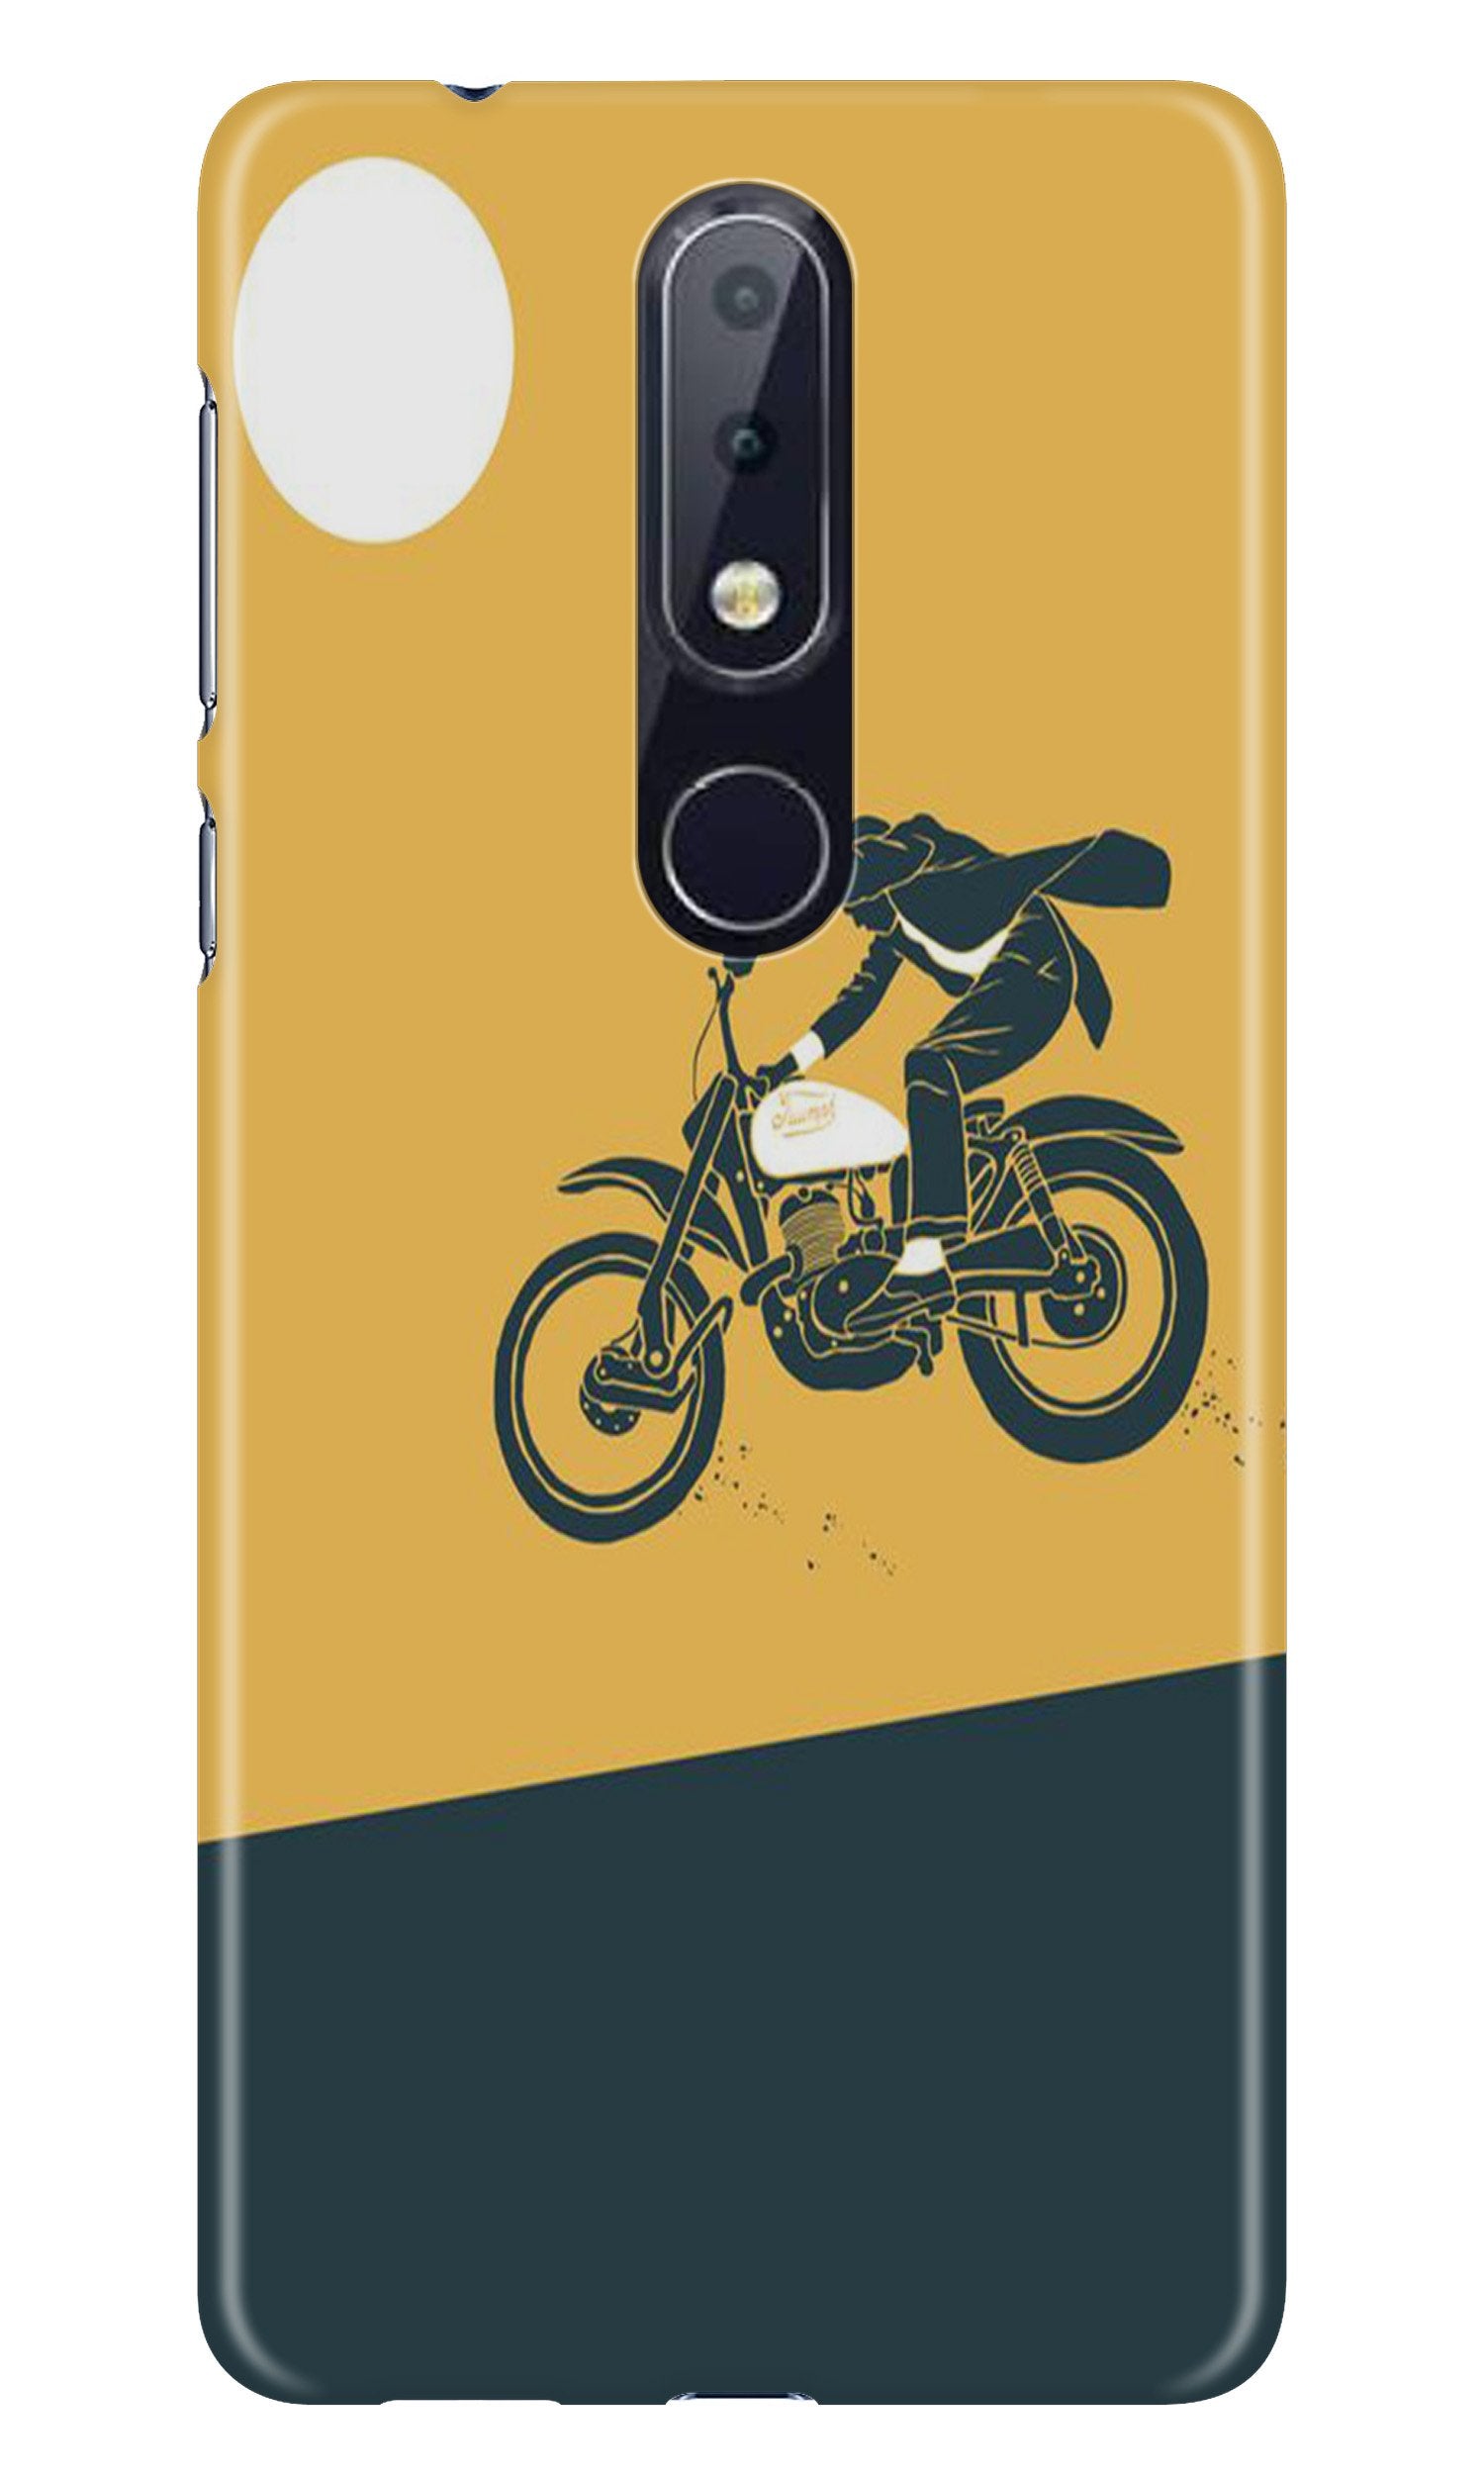 Bike Lovers Case for Nokia 7.1 (Design No. 256)